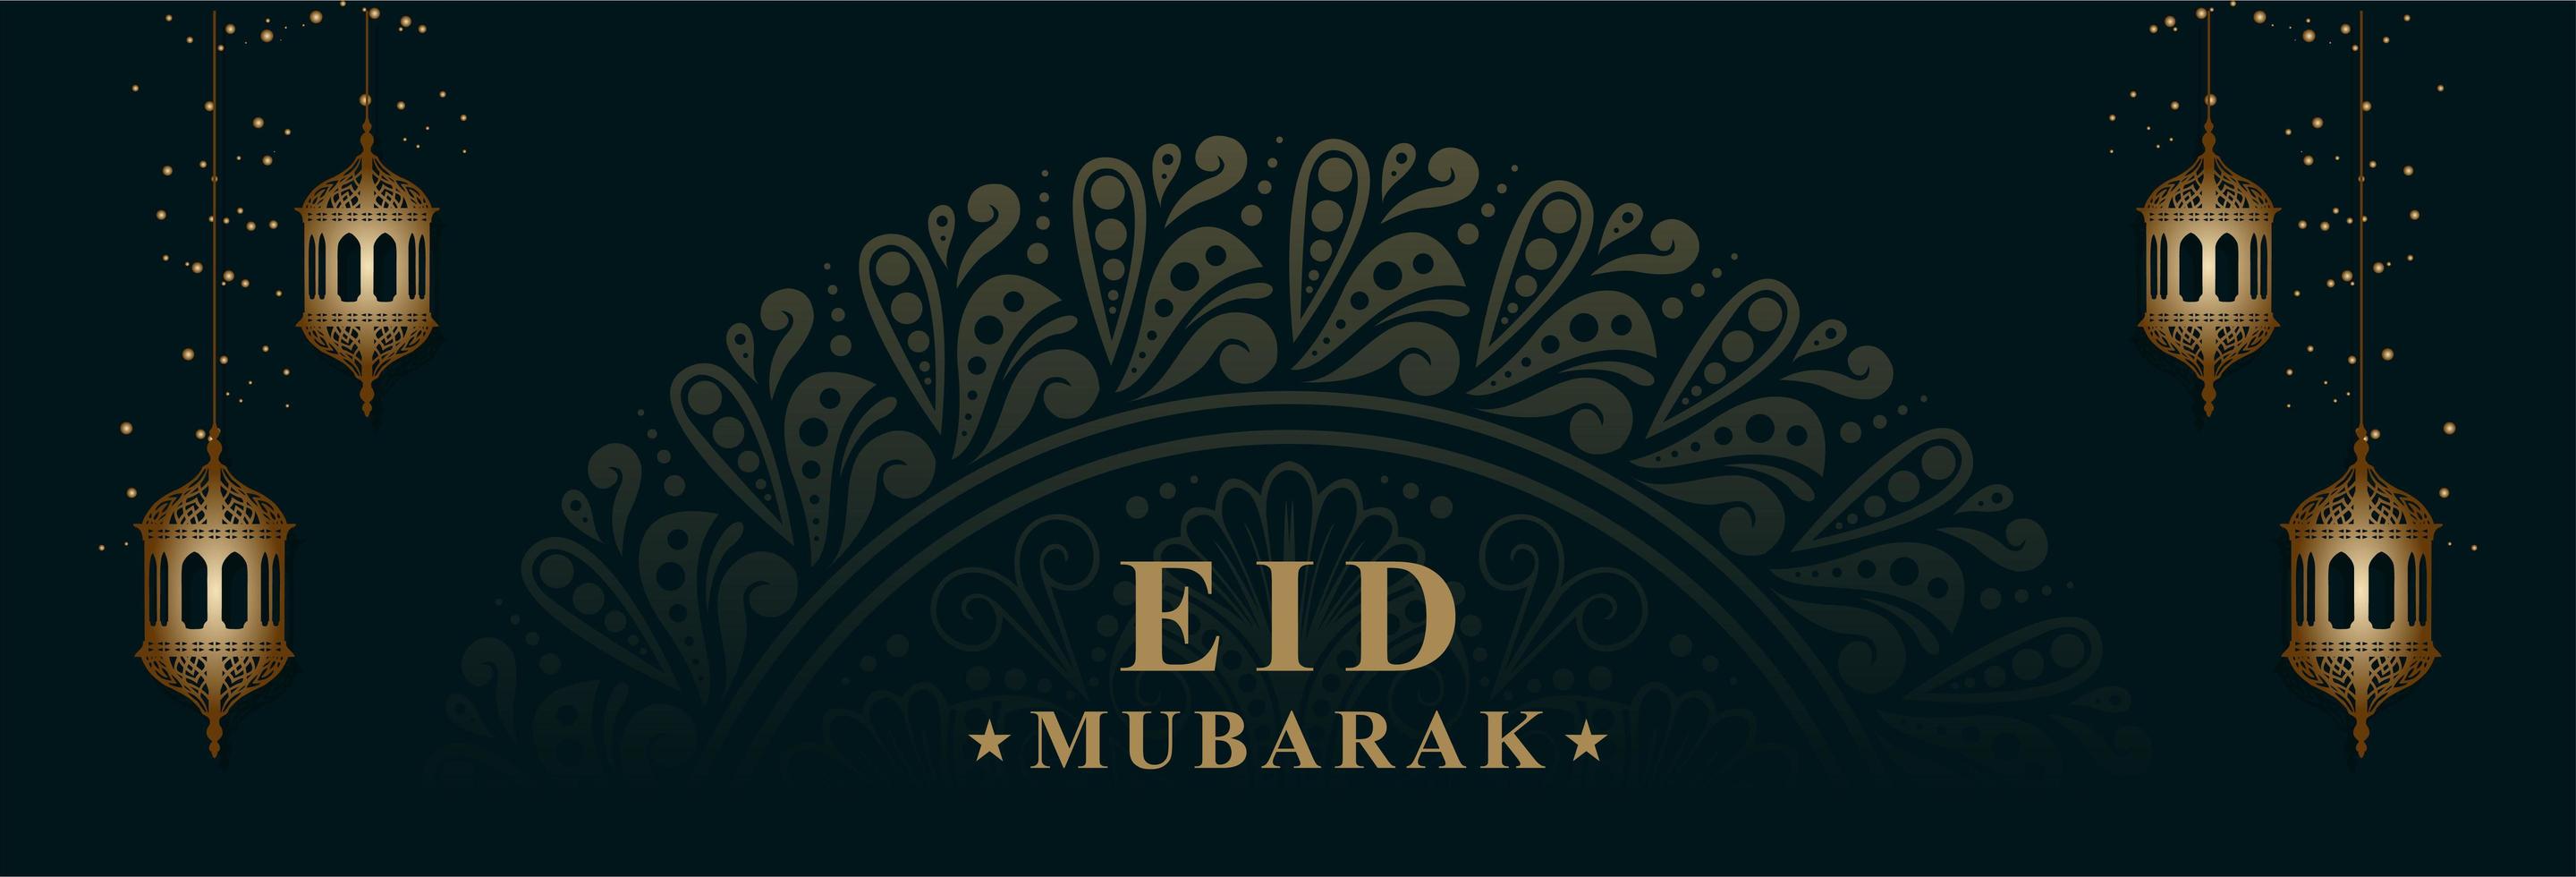 Eid Mubarak banner with golden lanterns vector